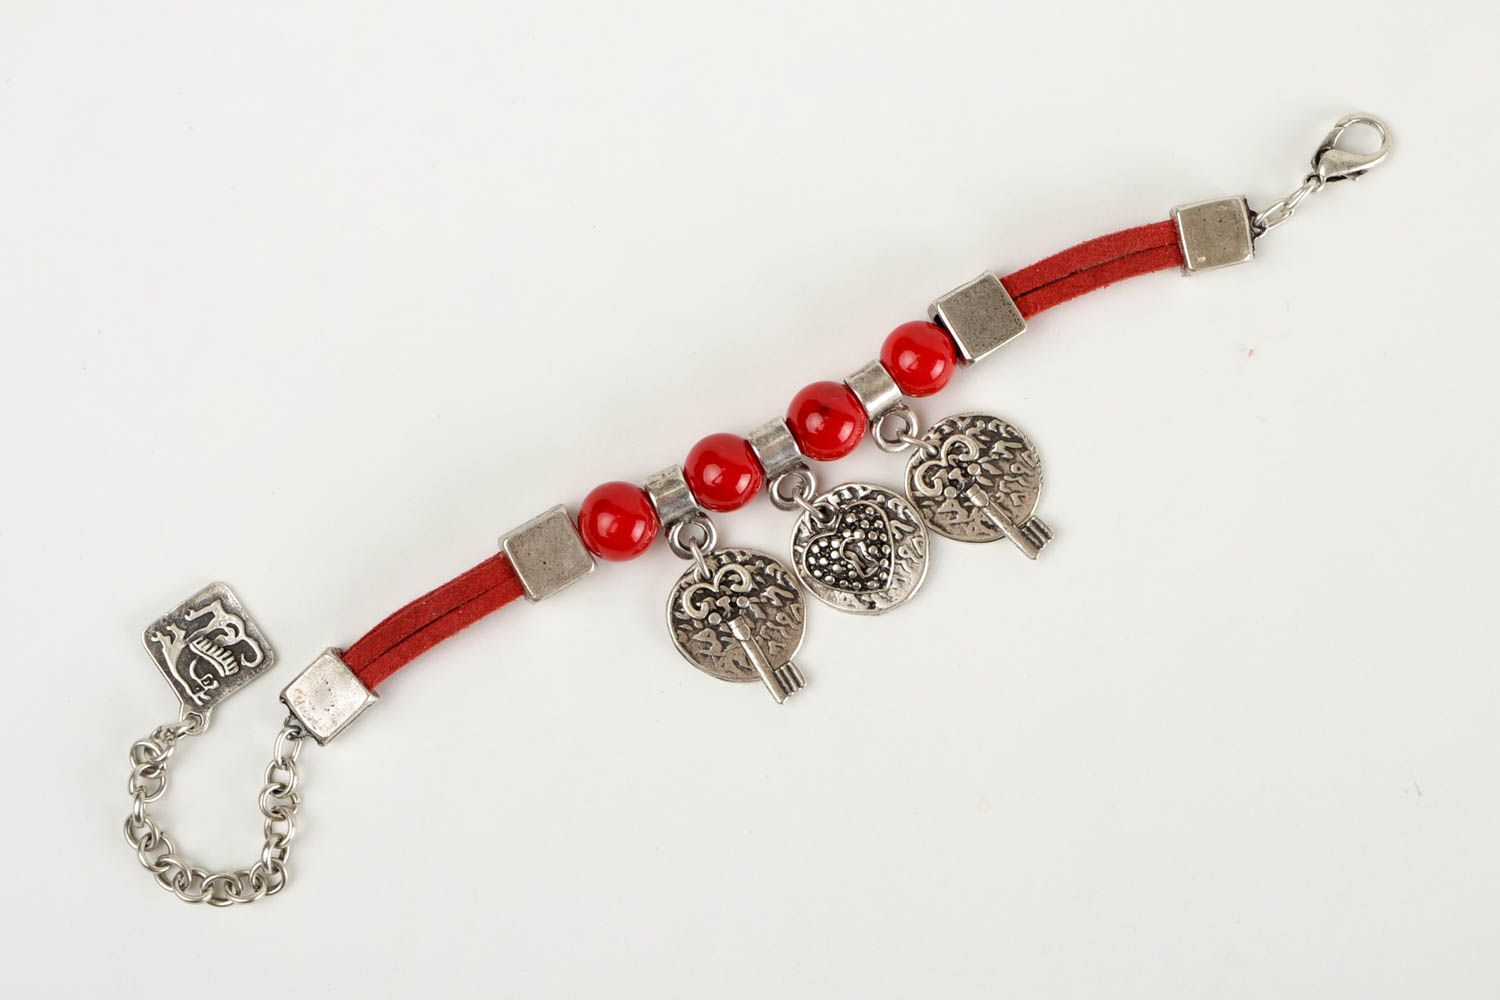 Unusual handmade metal bracelet cool jewelry designs metal craft ideas photo 4